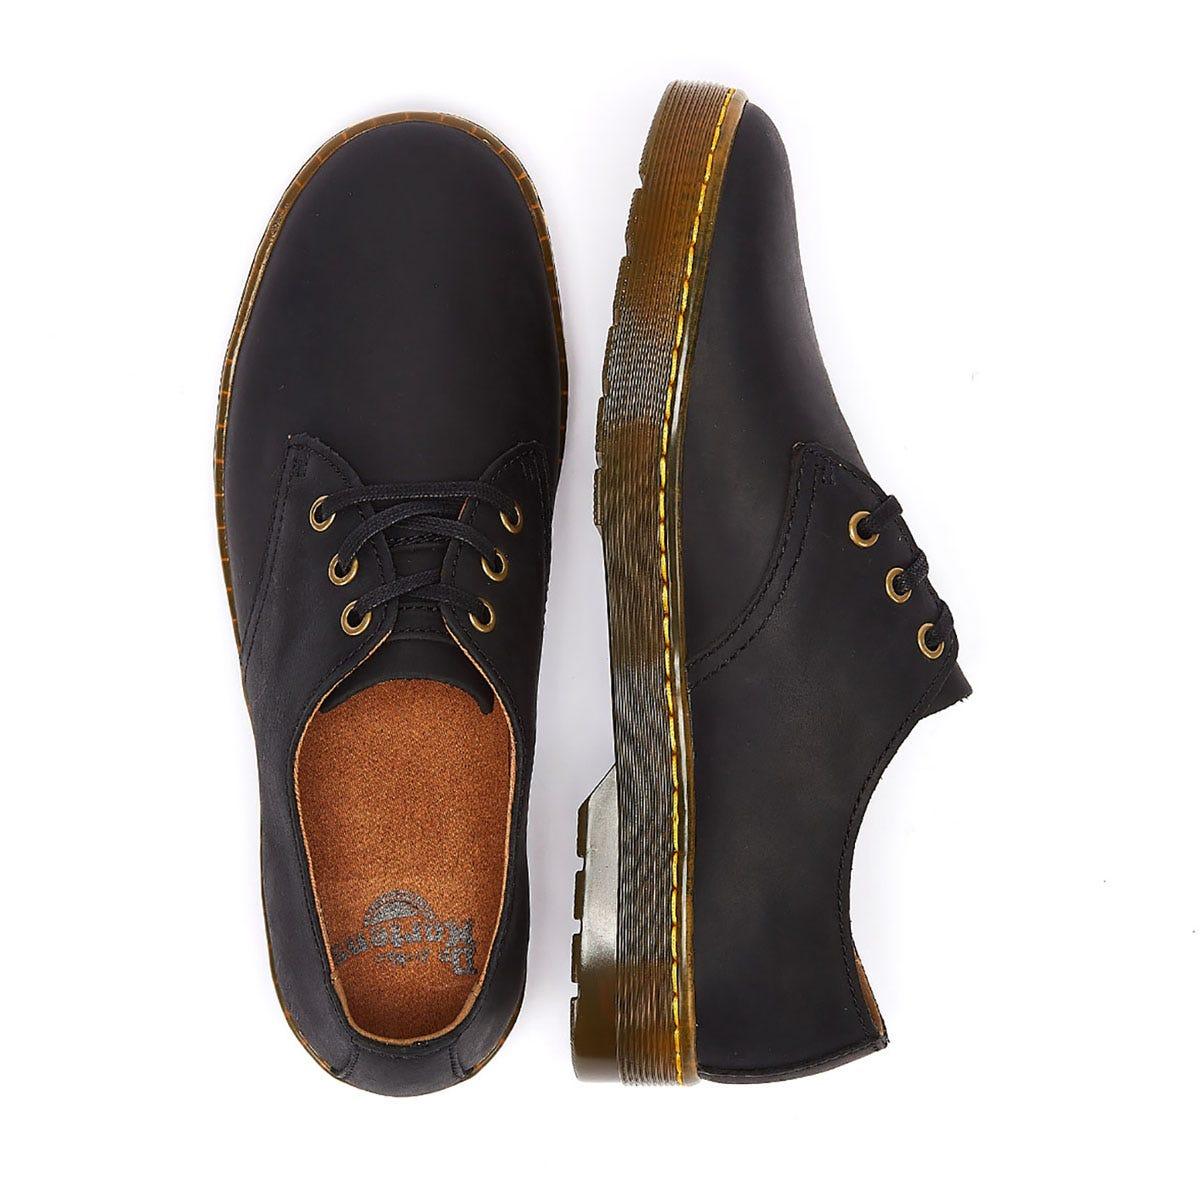 Dr. Martens Leather Coronado Shoe in Black for Men - Save 44% - Lyst